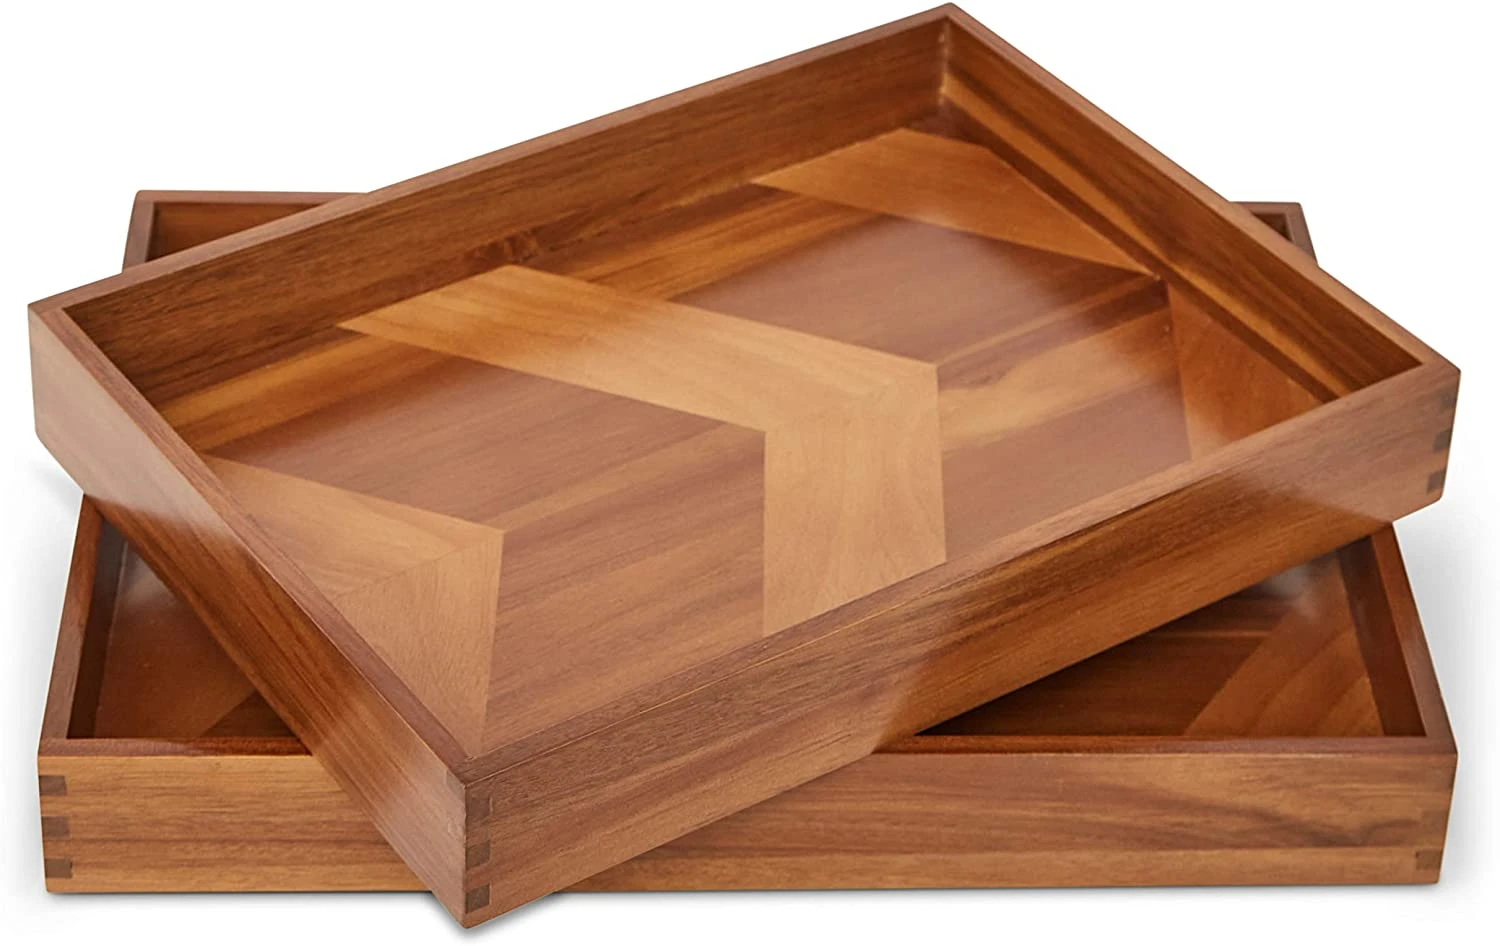 Wooden Tray - 2-piece Set - No Handle - Decorative Coffee Table Tray - Make-up Storage Box - Farmhouse Decorative - Home Decorat